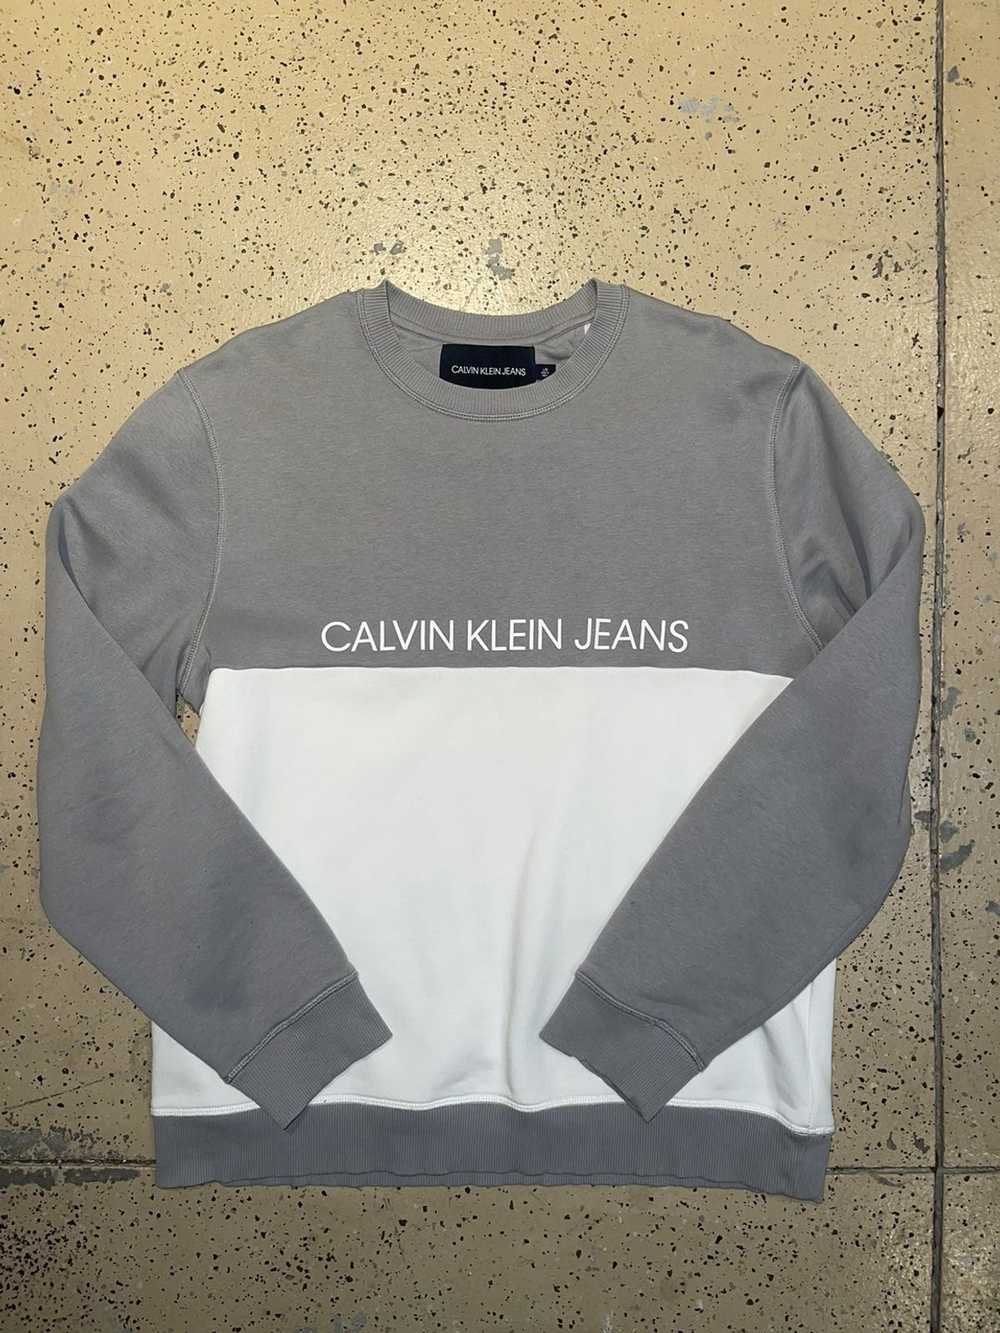 Calvin Klein Grey and White Calvin Klein Sweatshi… - image 1